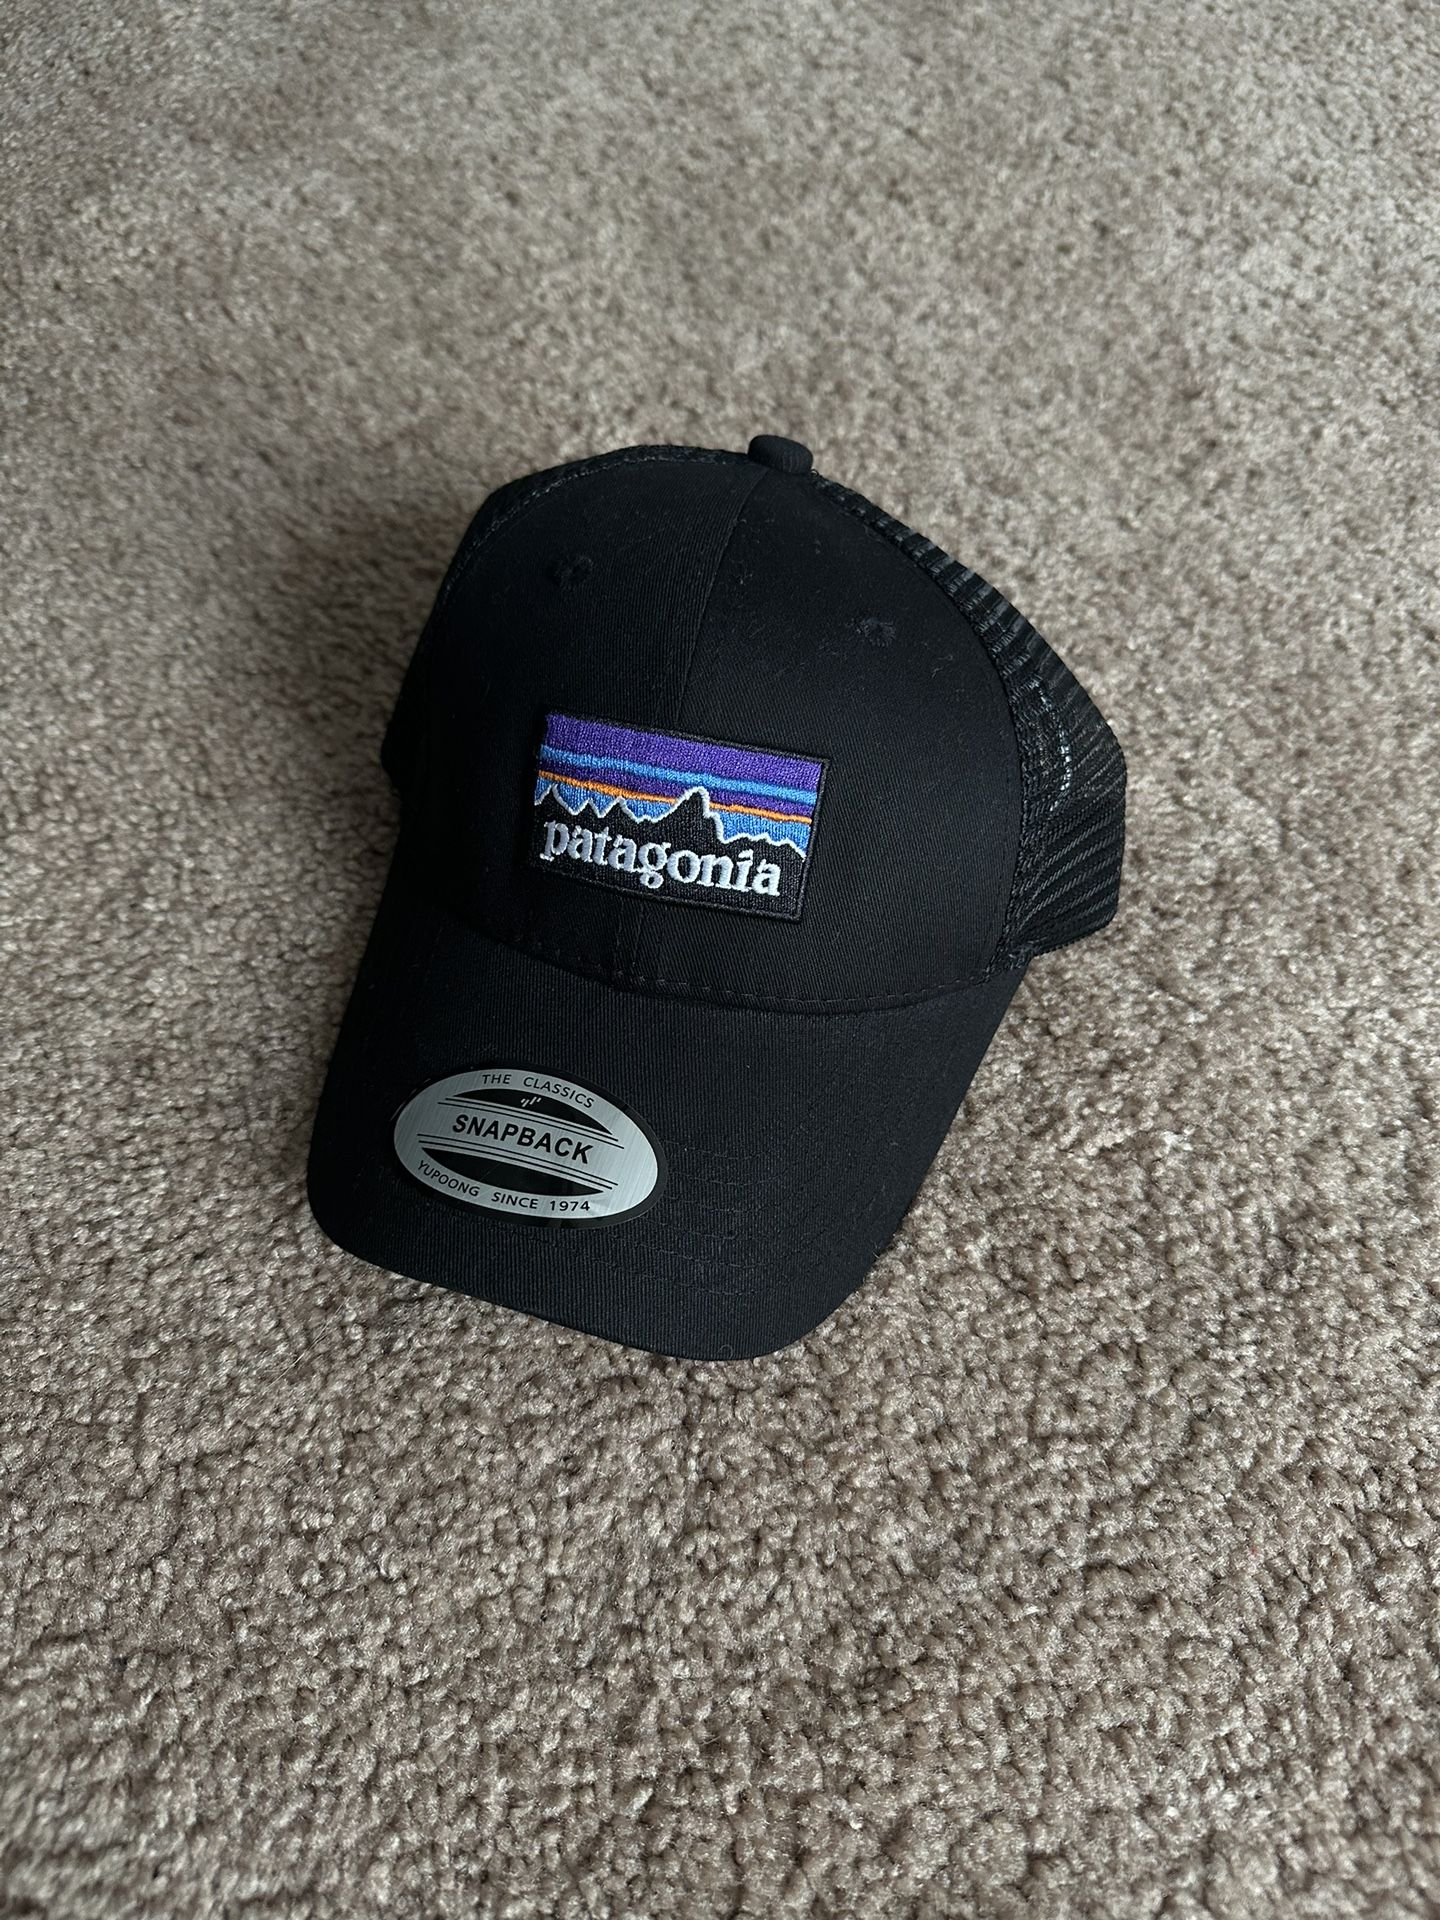 Patagonia Hat 